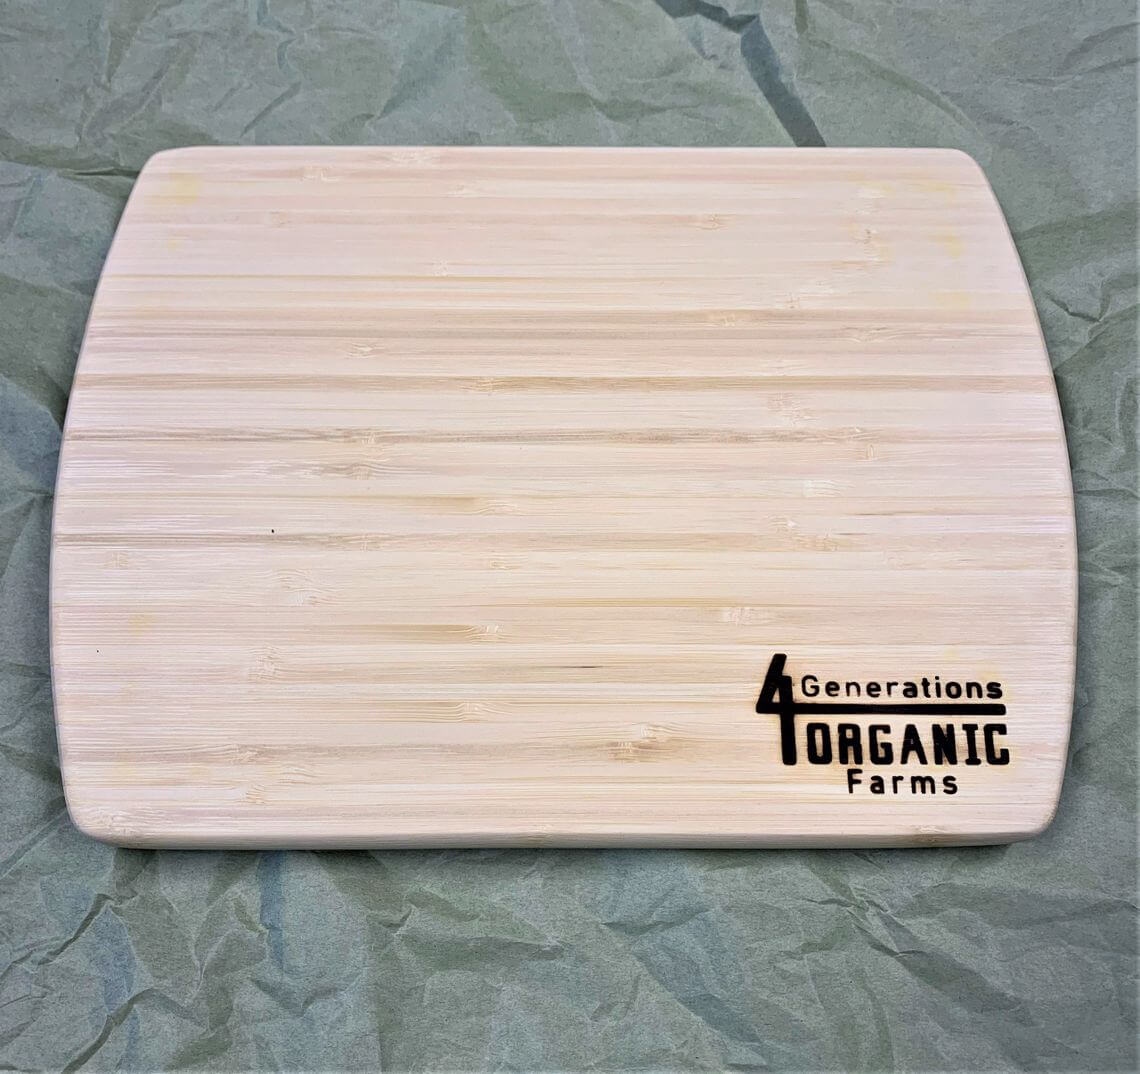 https://4generationsorganic.com/wp-content/uploads/2021/05/4-generations-organic-bamboo-cutting-board.jpg